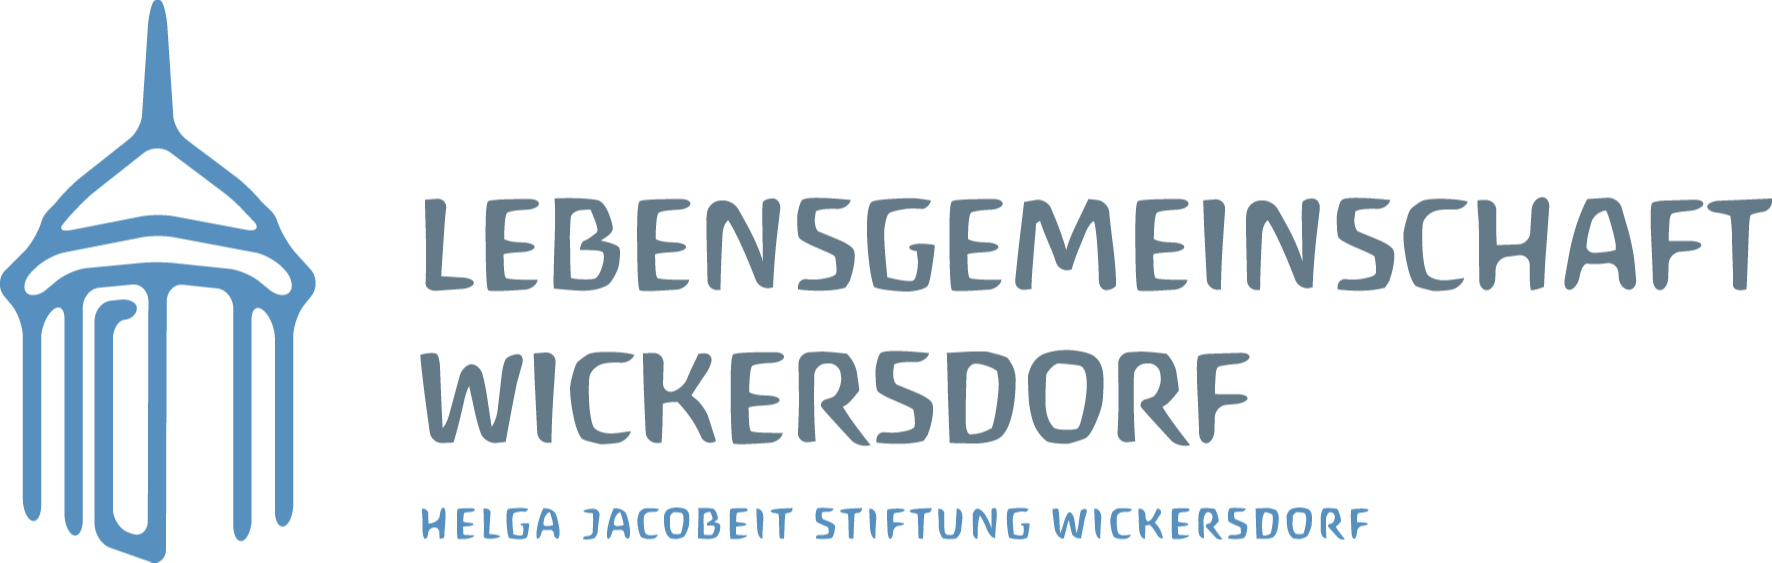 Logo der Firma Helga Jacobeit Stiftung "Lebensgemeinschaft Wickersdorf" aus Saalfeld/Saale